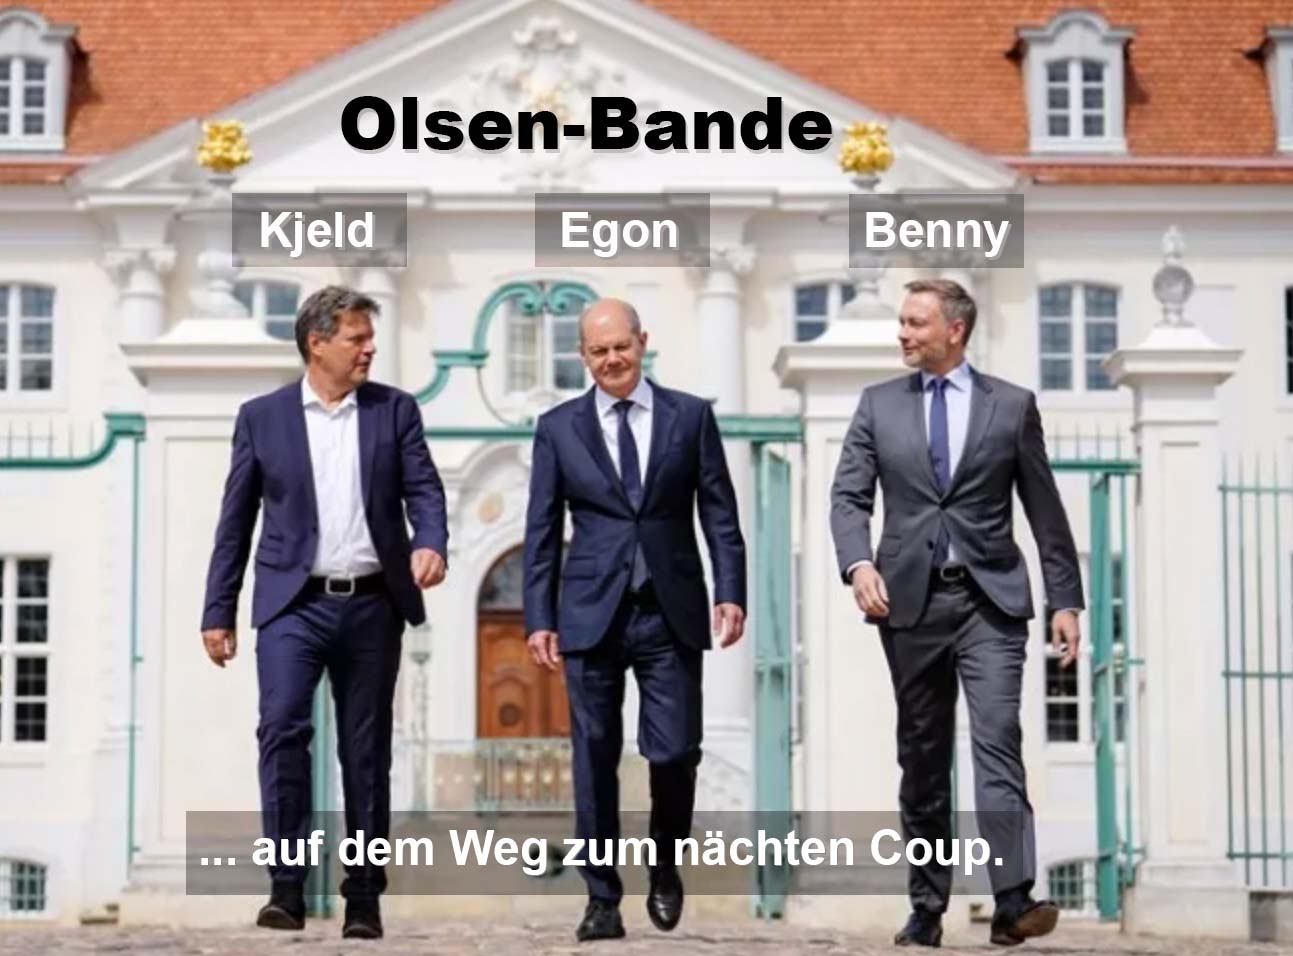 Olsenbande, Olaf Scholz, schallundwort.de